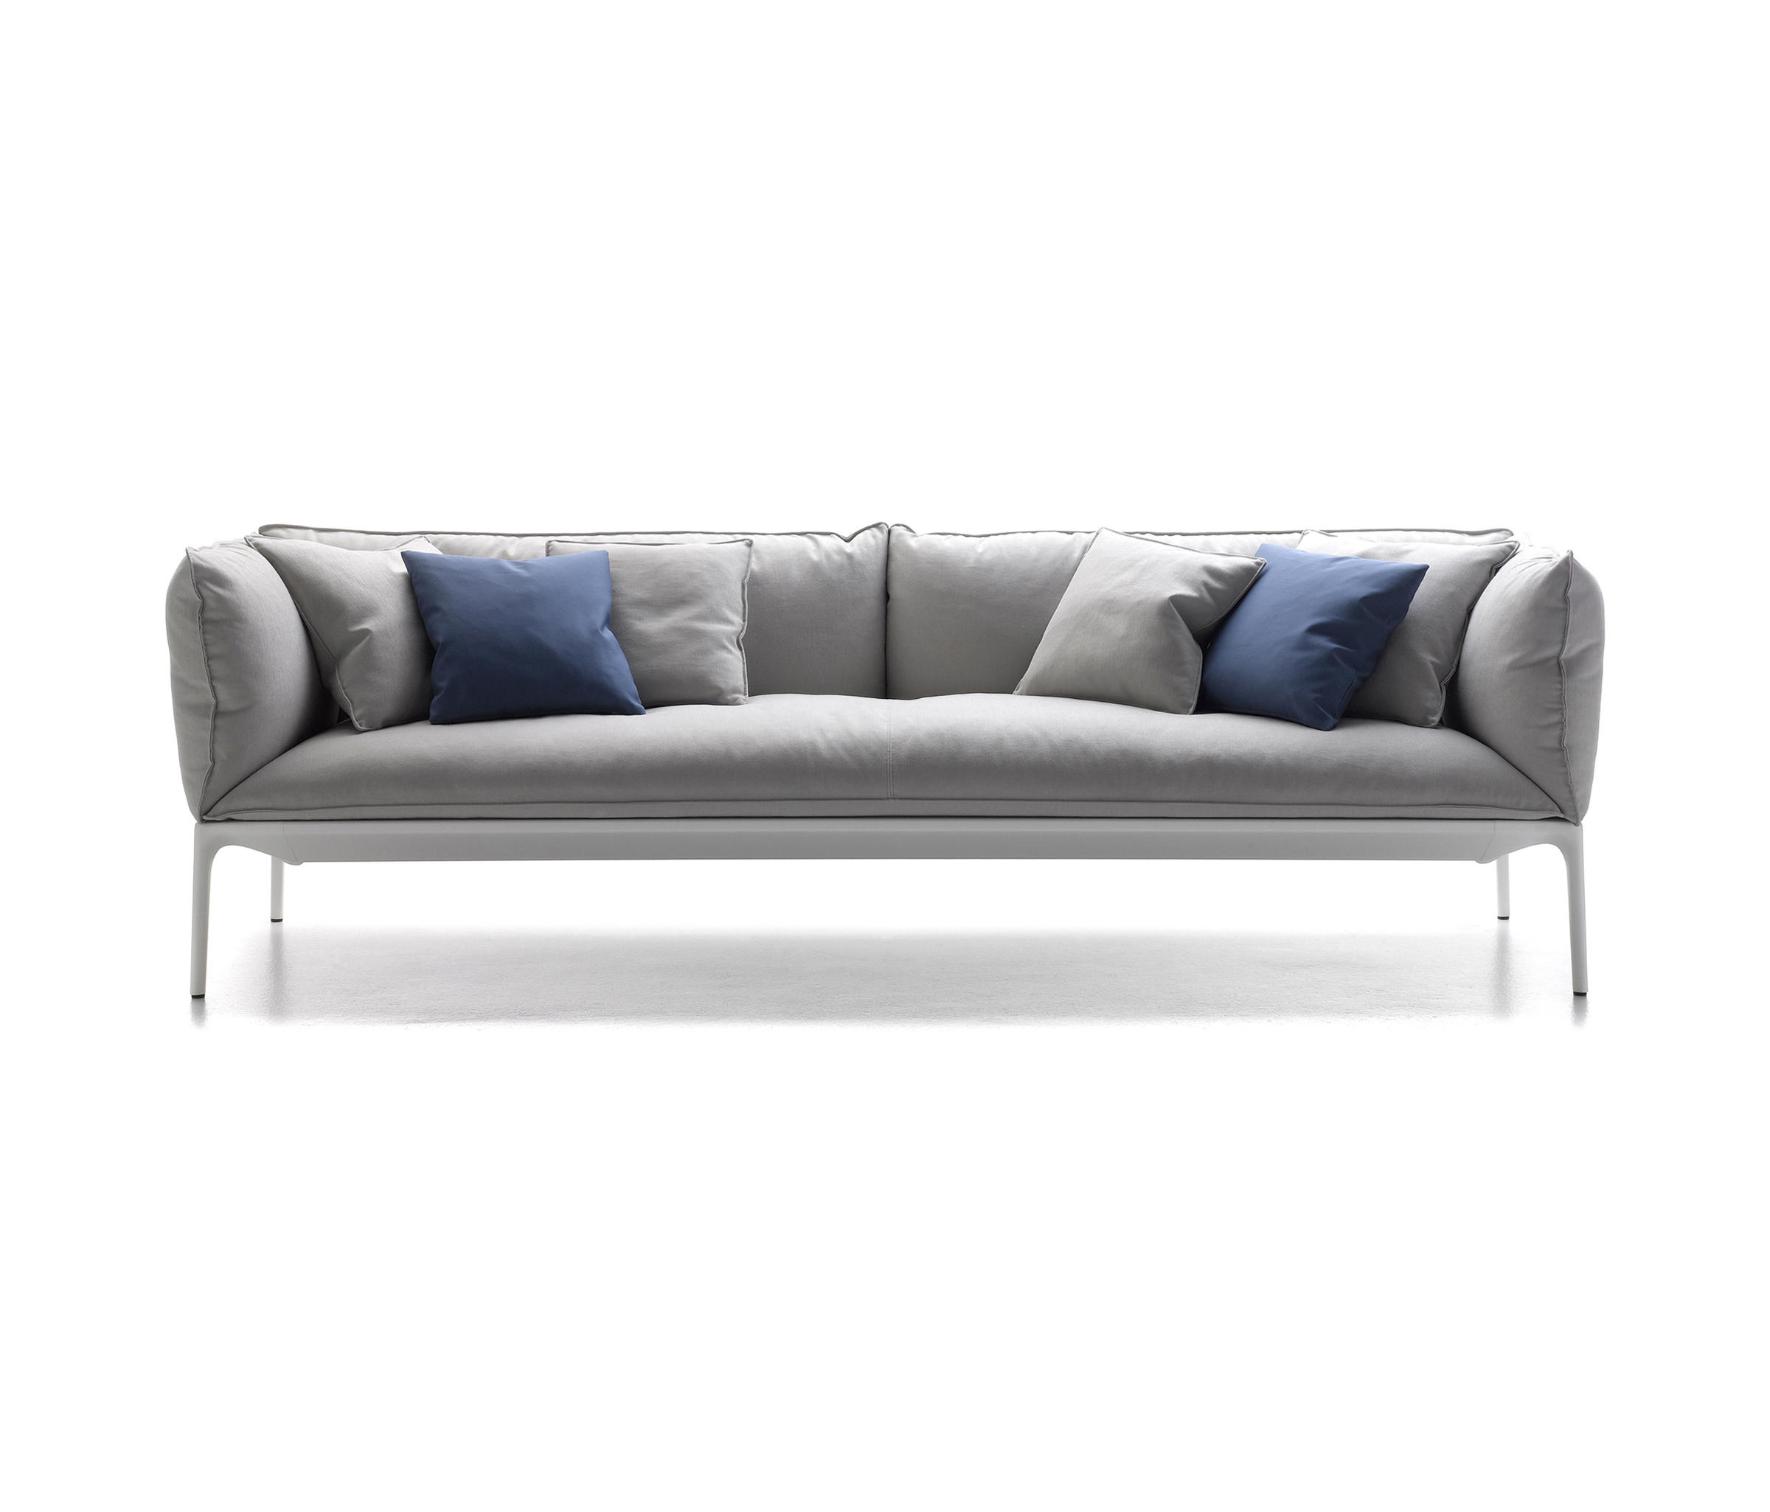 Yale Italian Sofa ☞ Dimensions: Length 160 cm